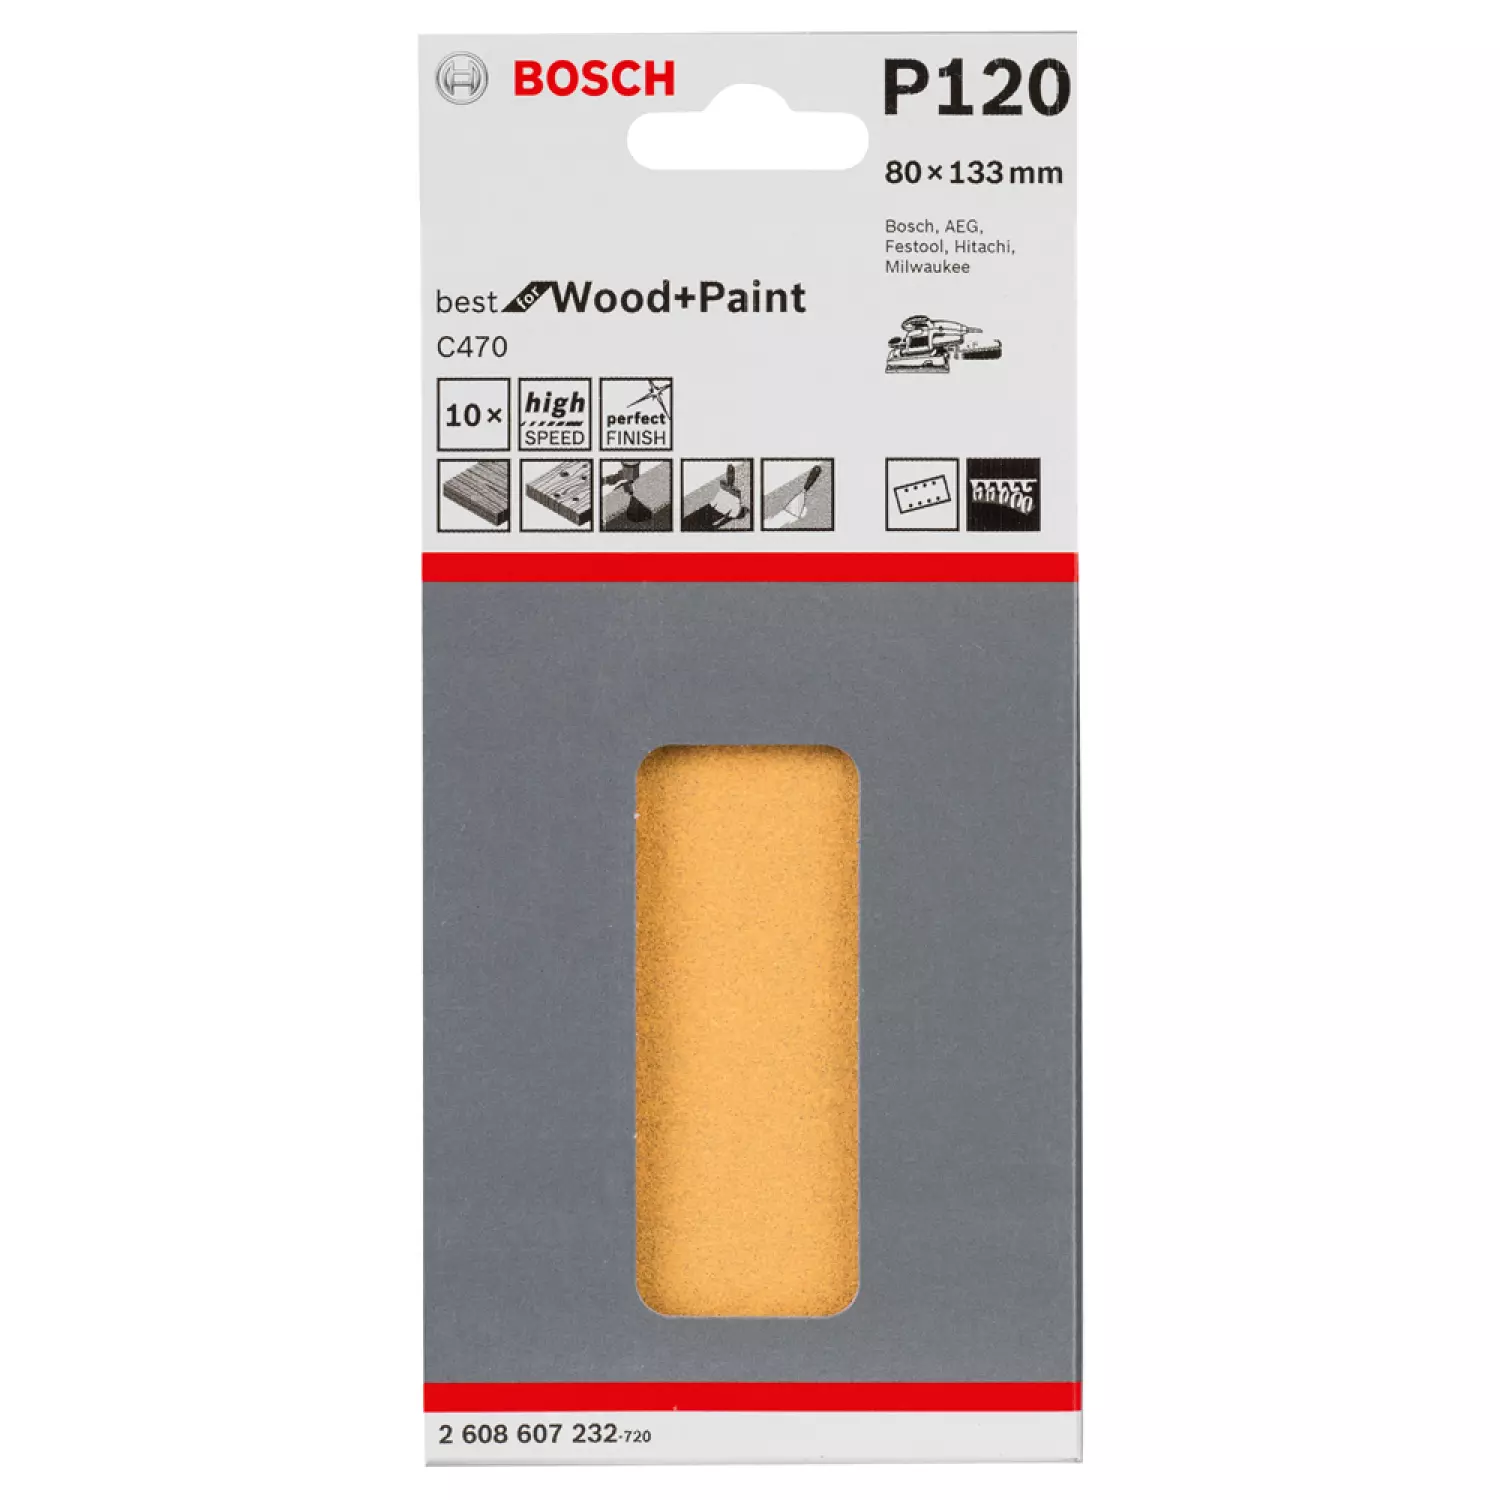 Bosch 06012A2300 - Ponceuse vibrante compacte GSS 160 Multi-usage